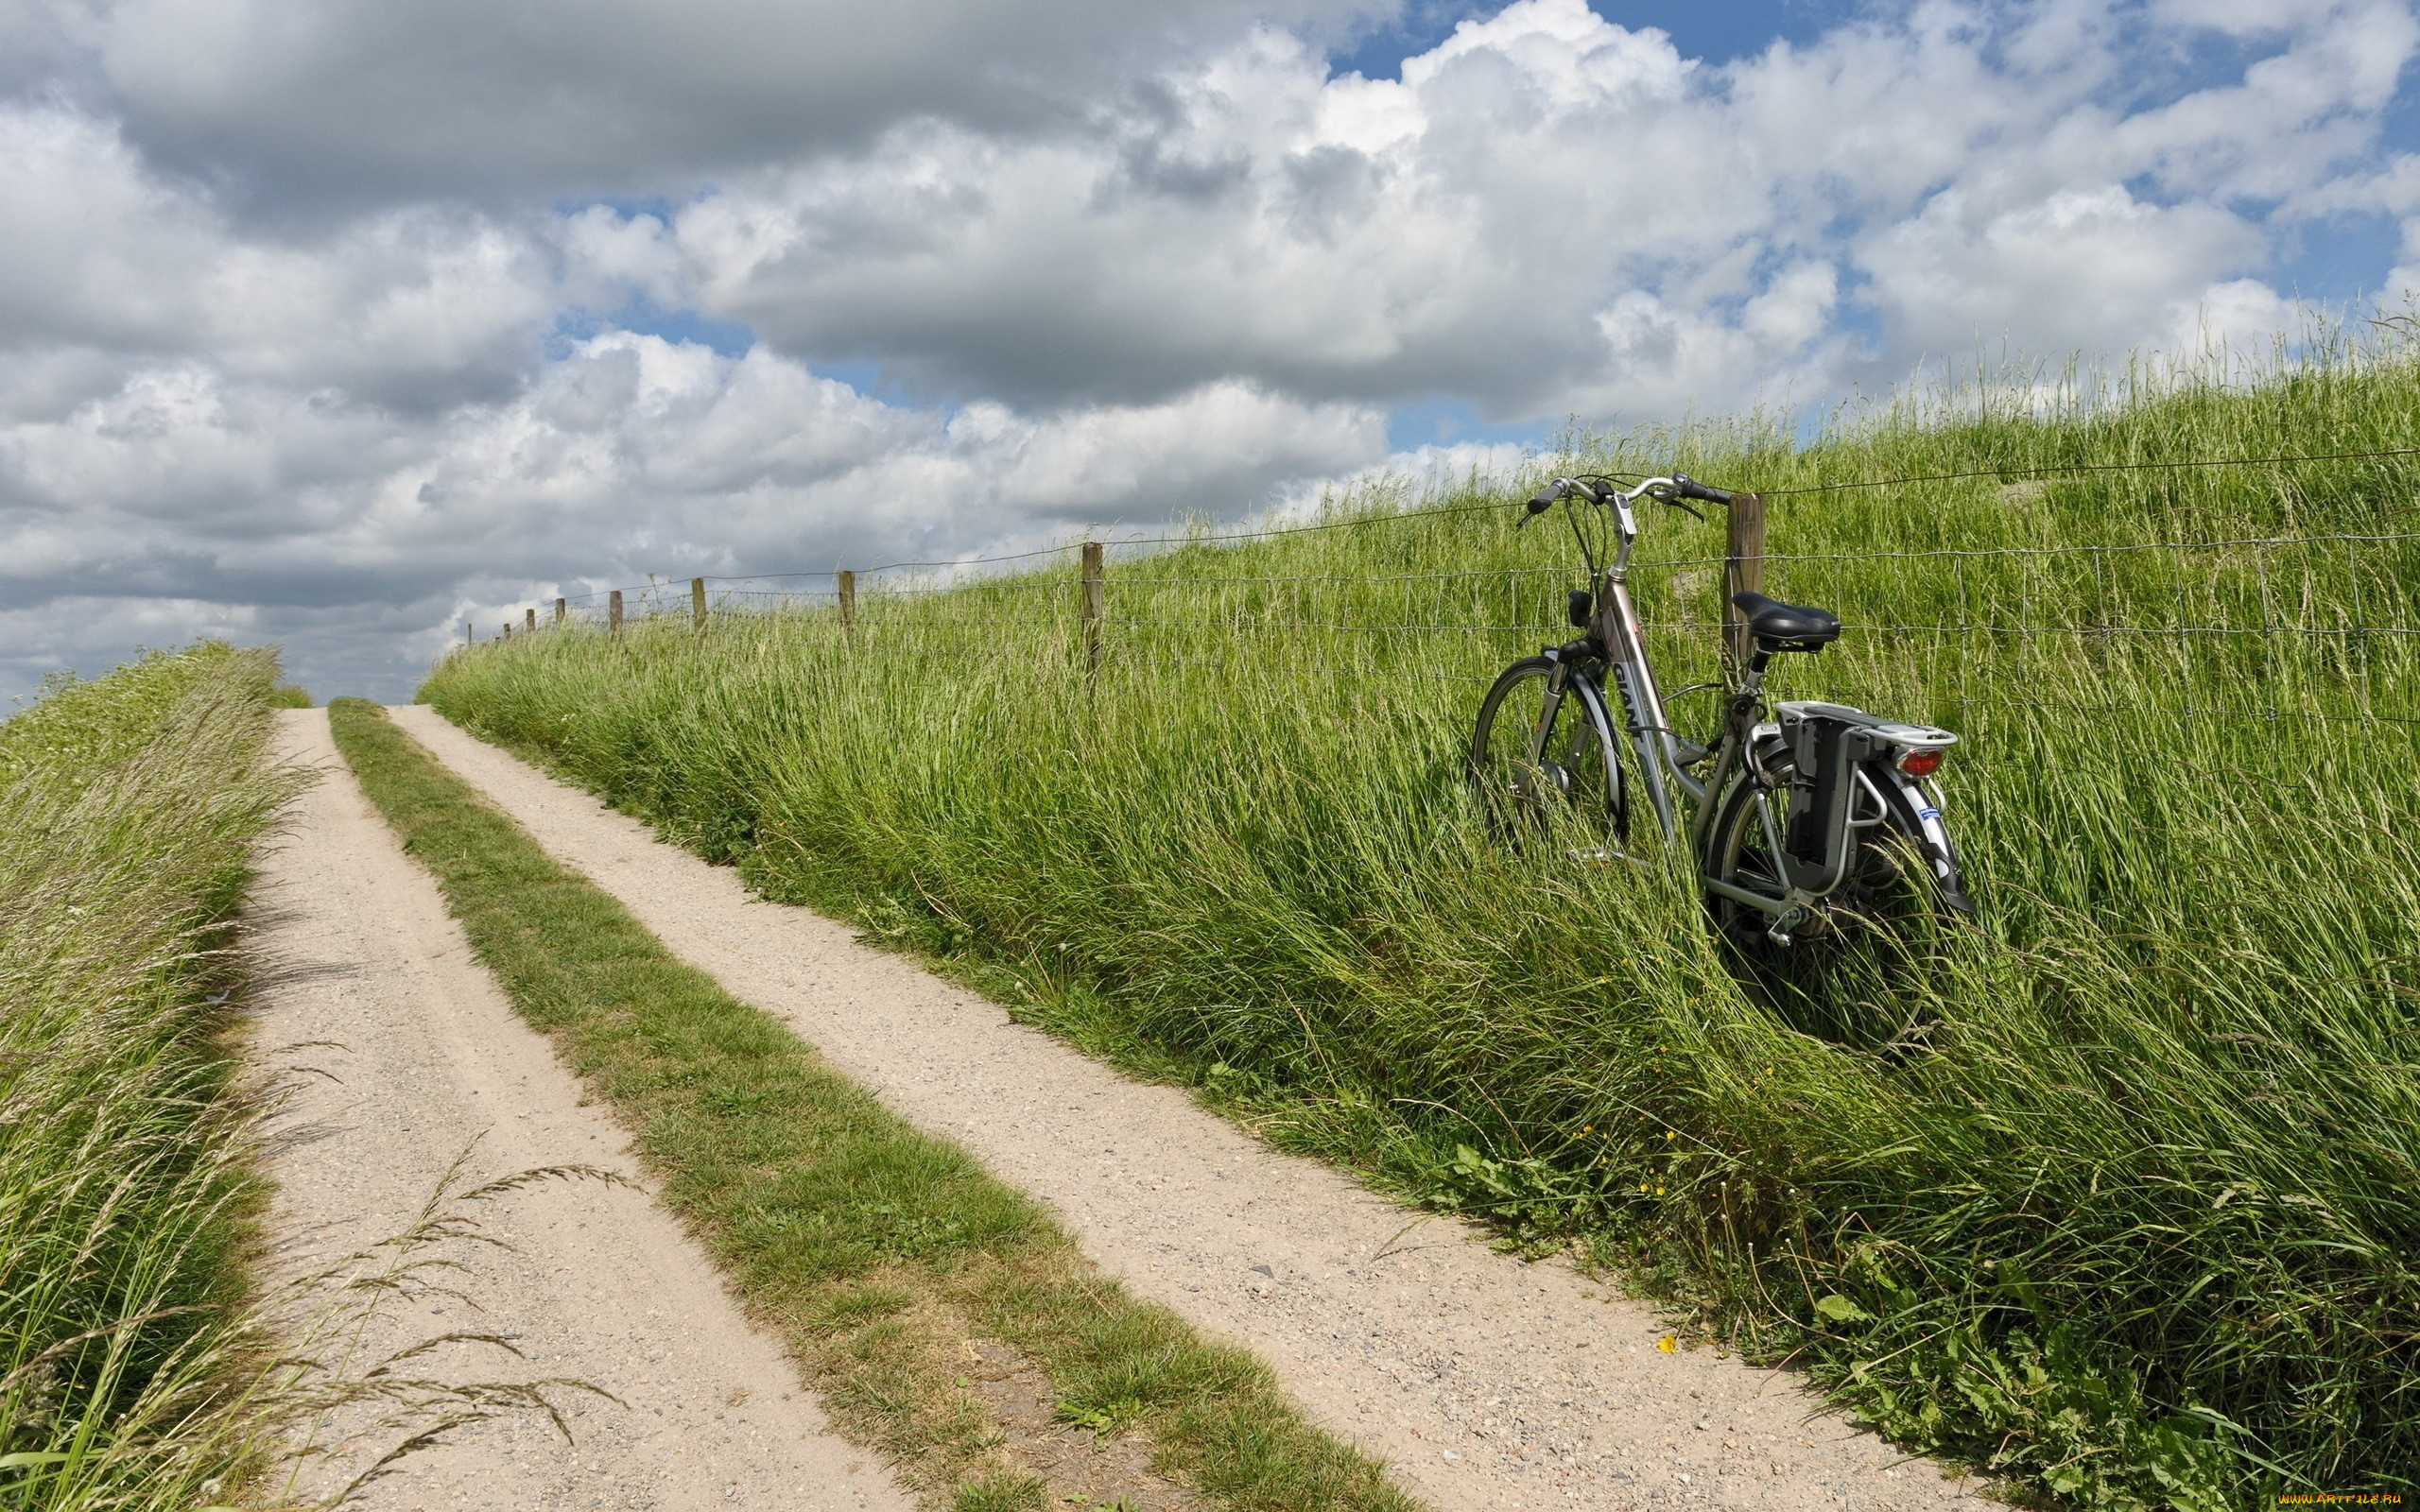 Countryside android. Проселочная дорога. Велосипед на траве. Сельская дорога. Велосипед в поле.